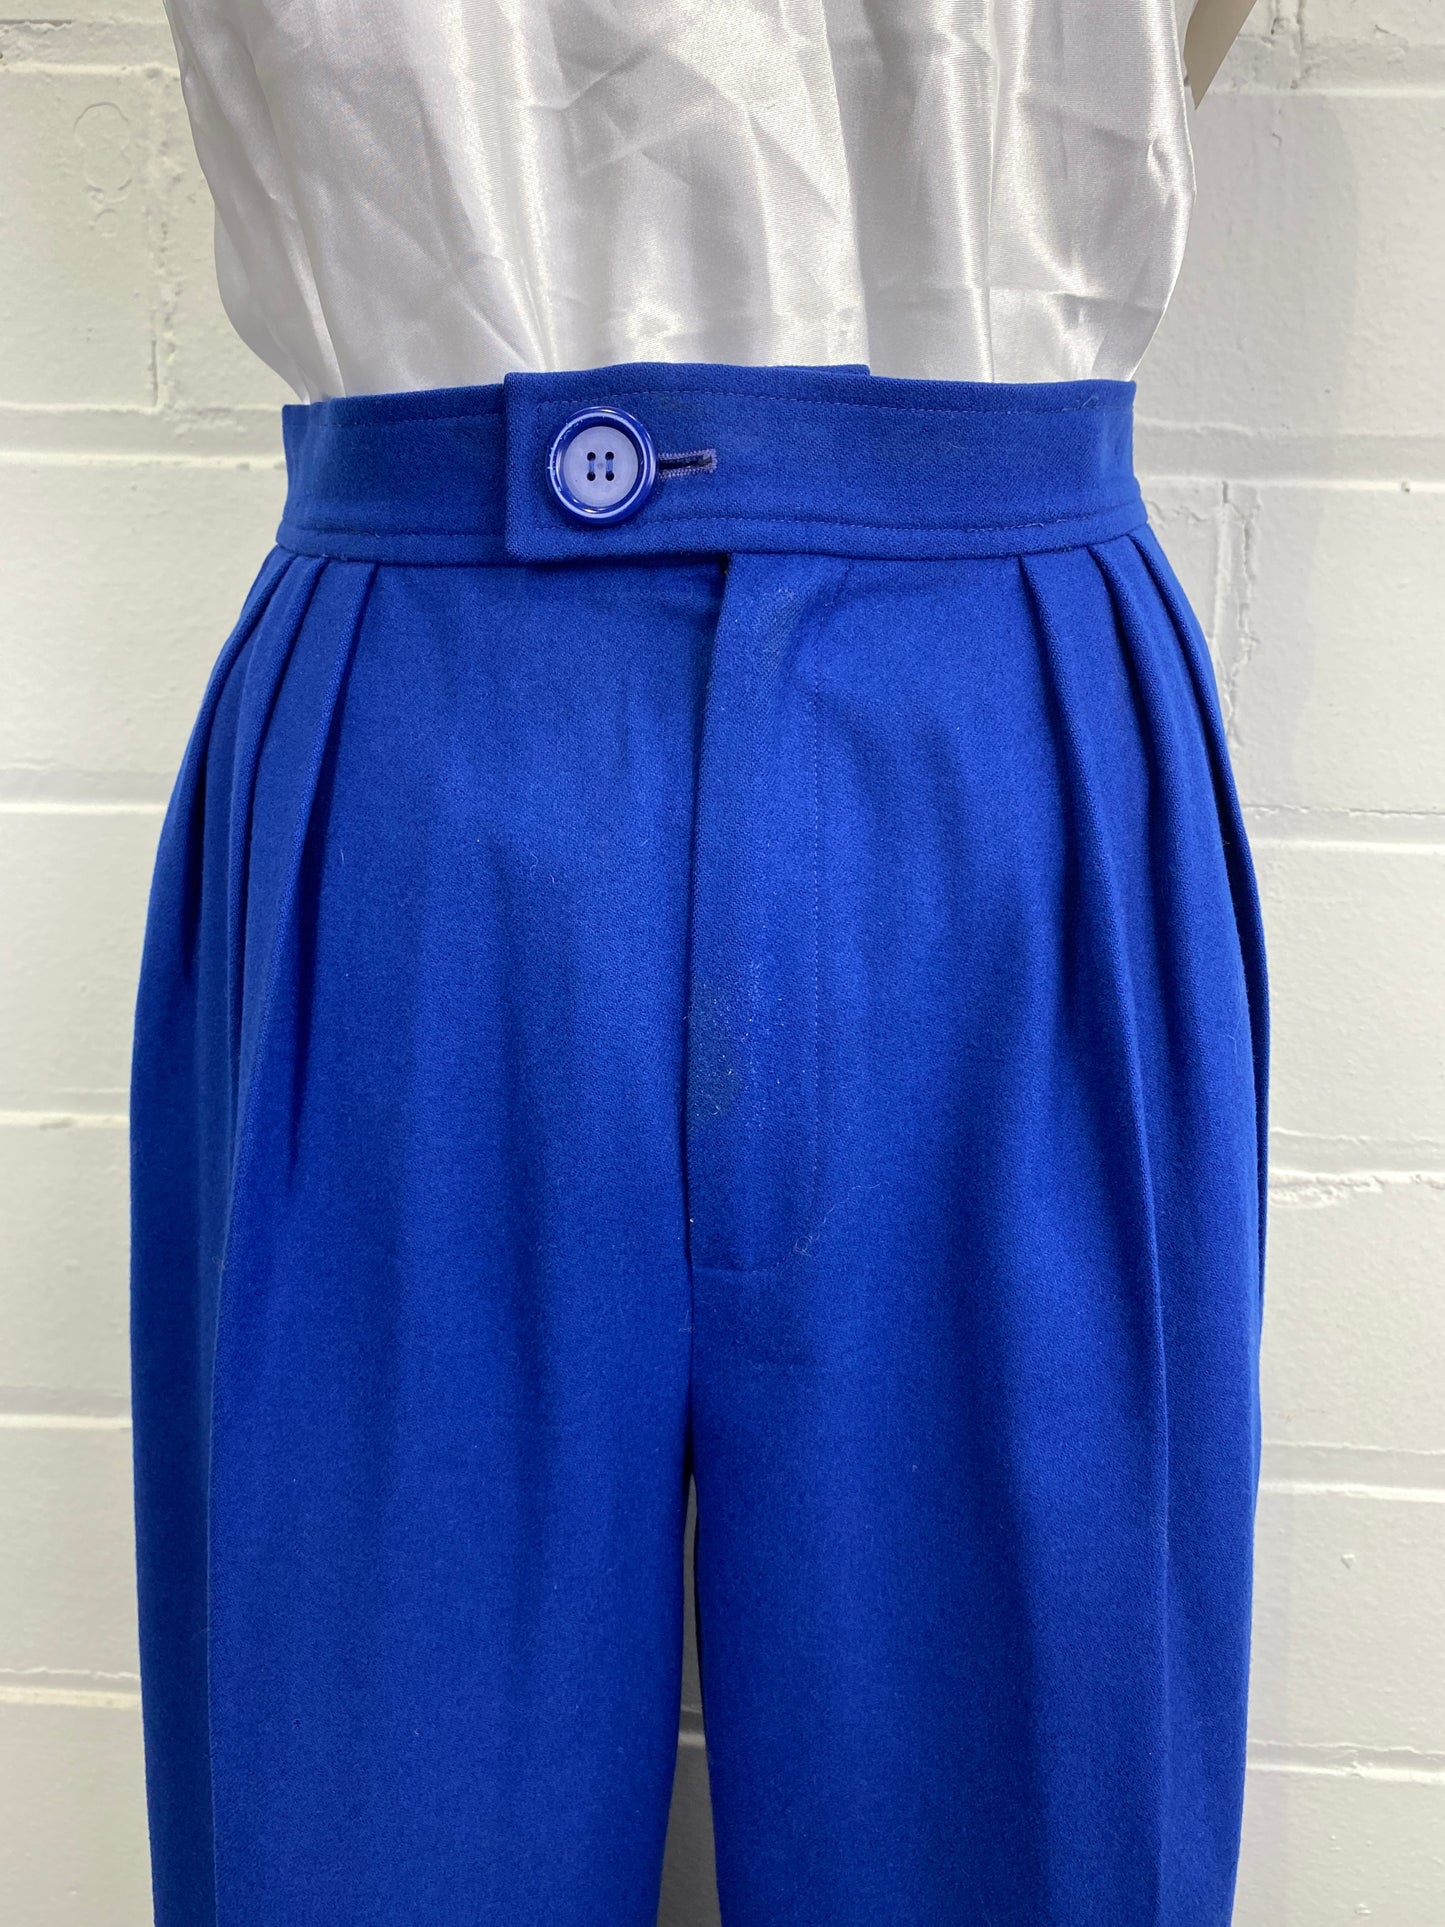 Vintage 1980s Yves Saint Laurent Royal Blue Pleated Pants, Small